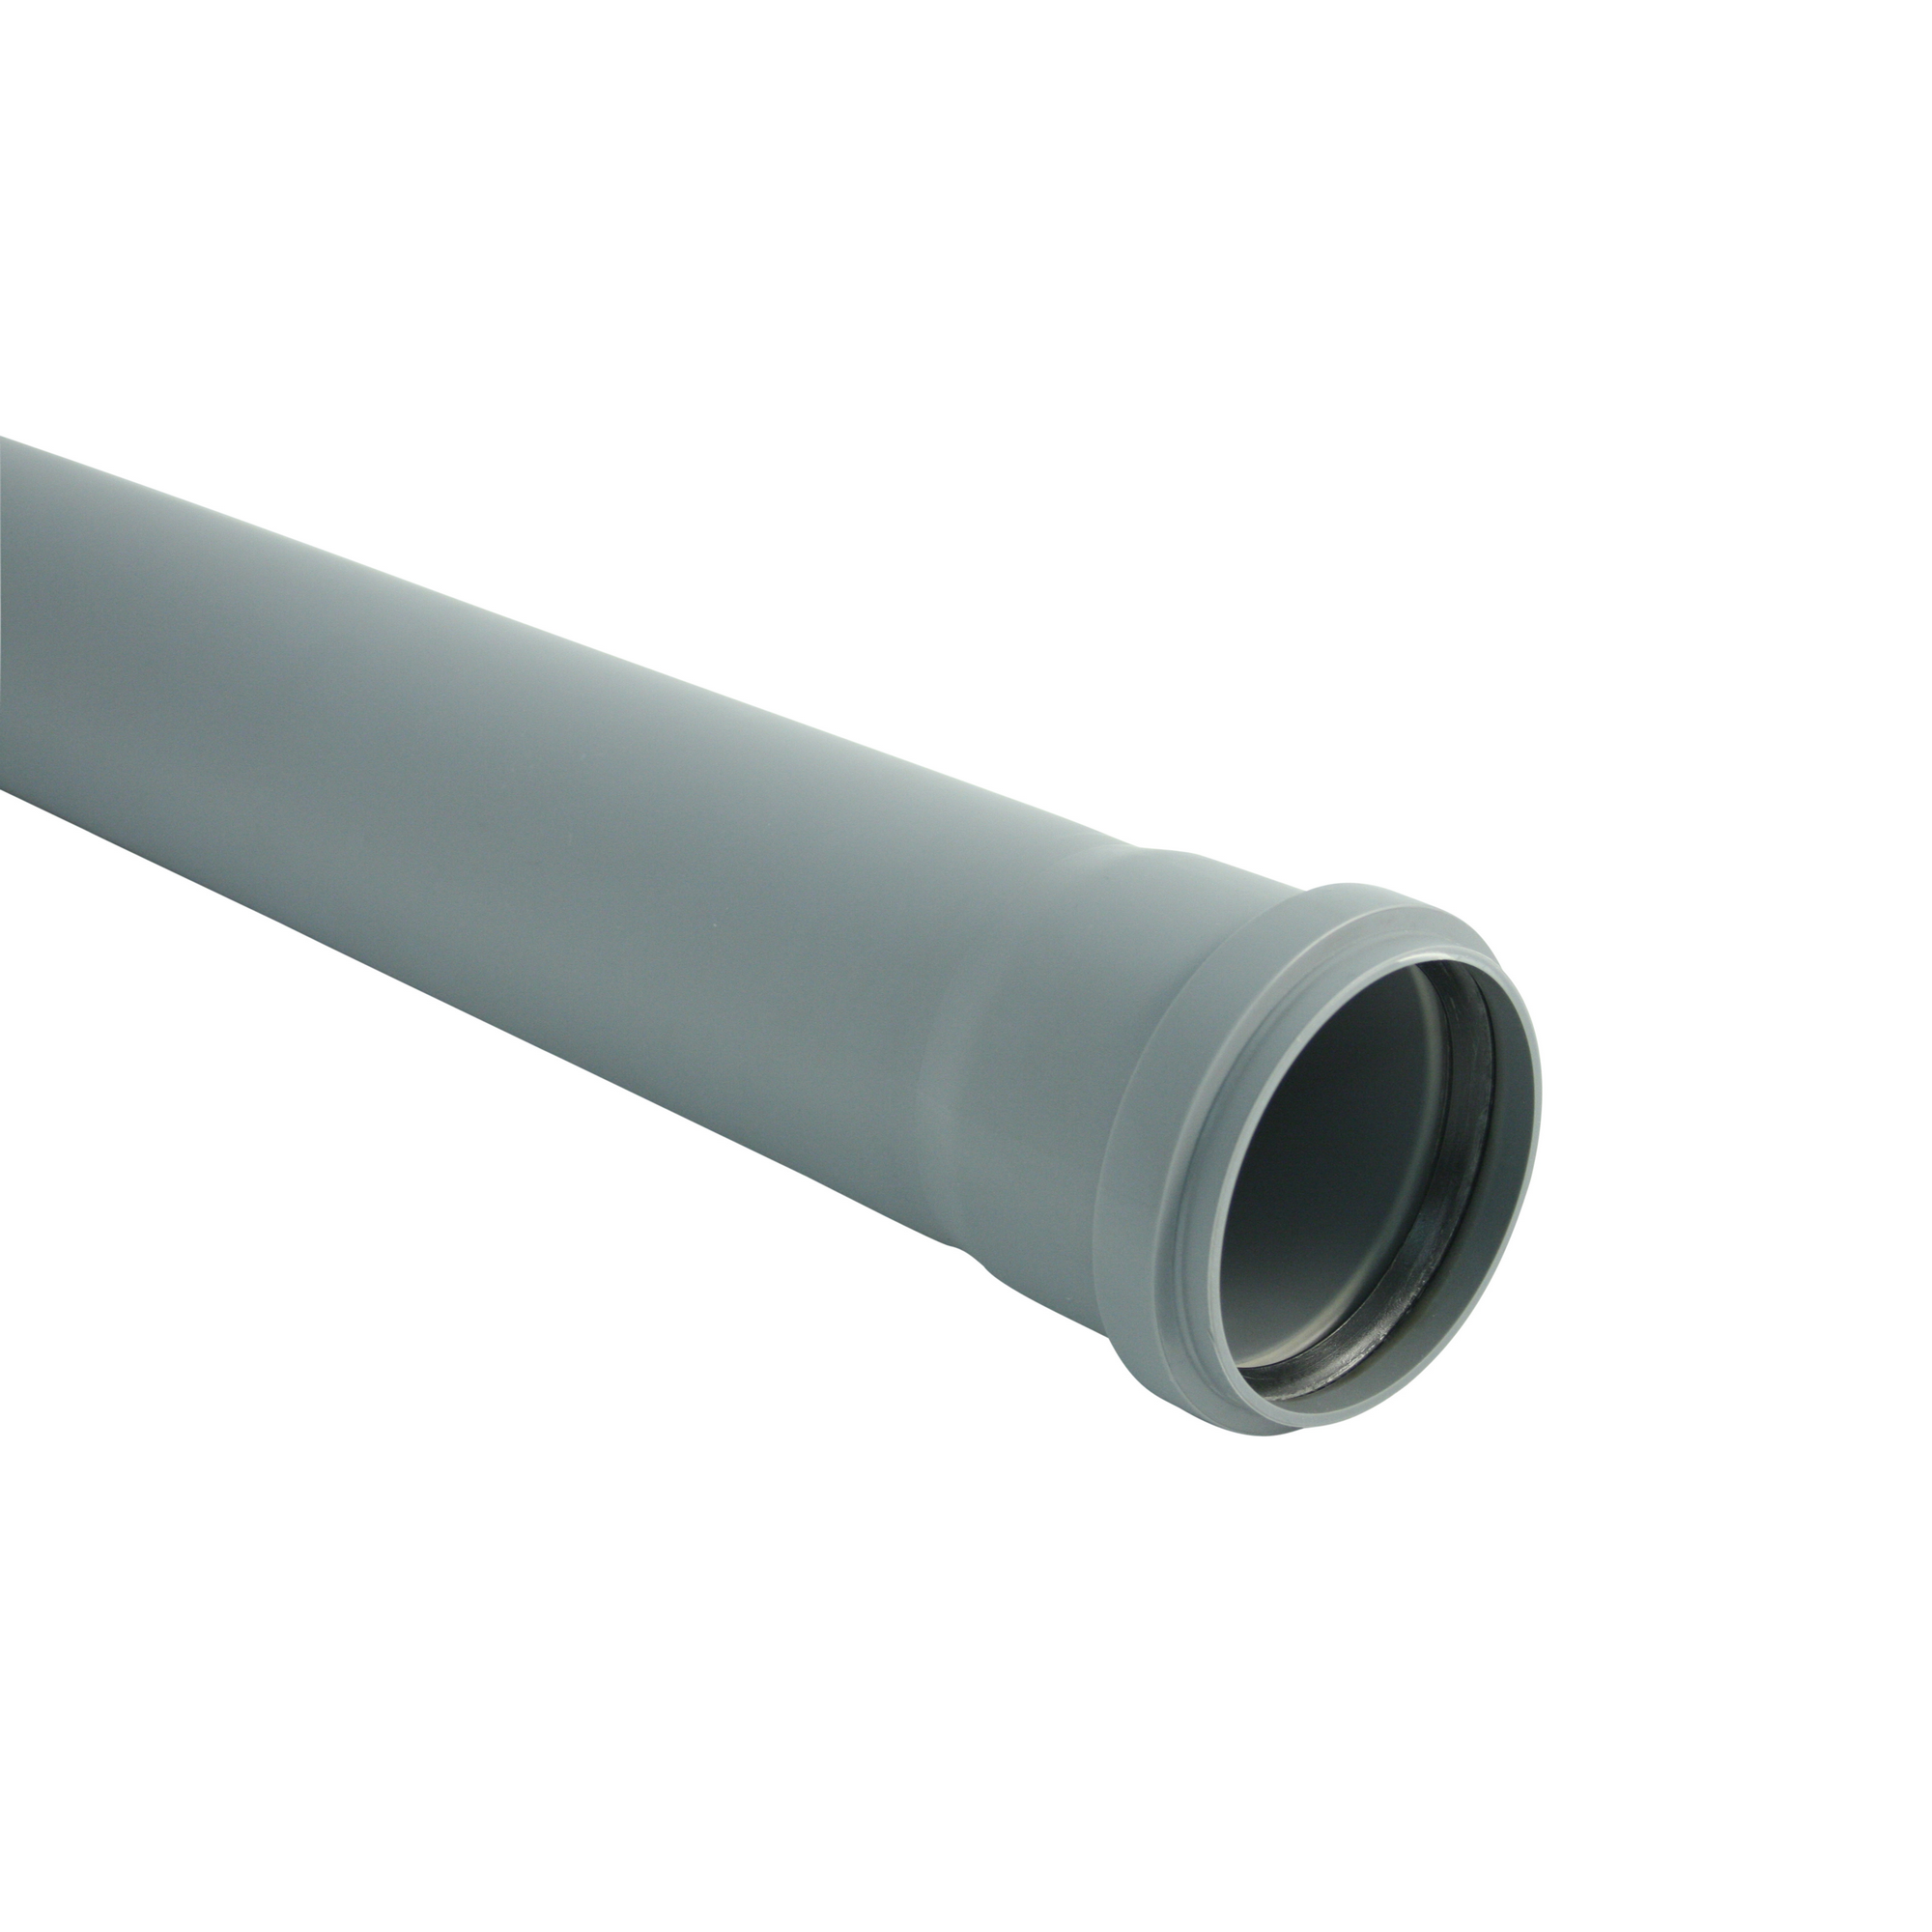 HTEM-Rohr mit Steckmuffe grau DN 90, 325 mm + product picture